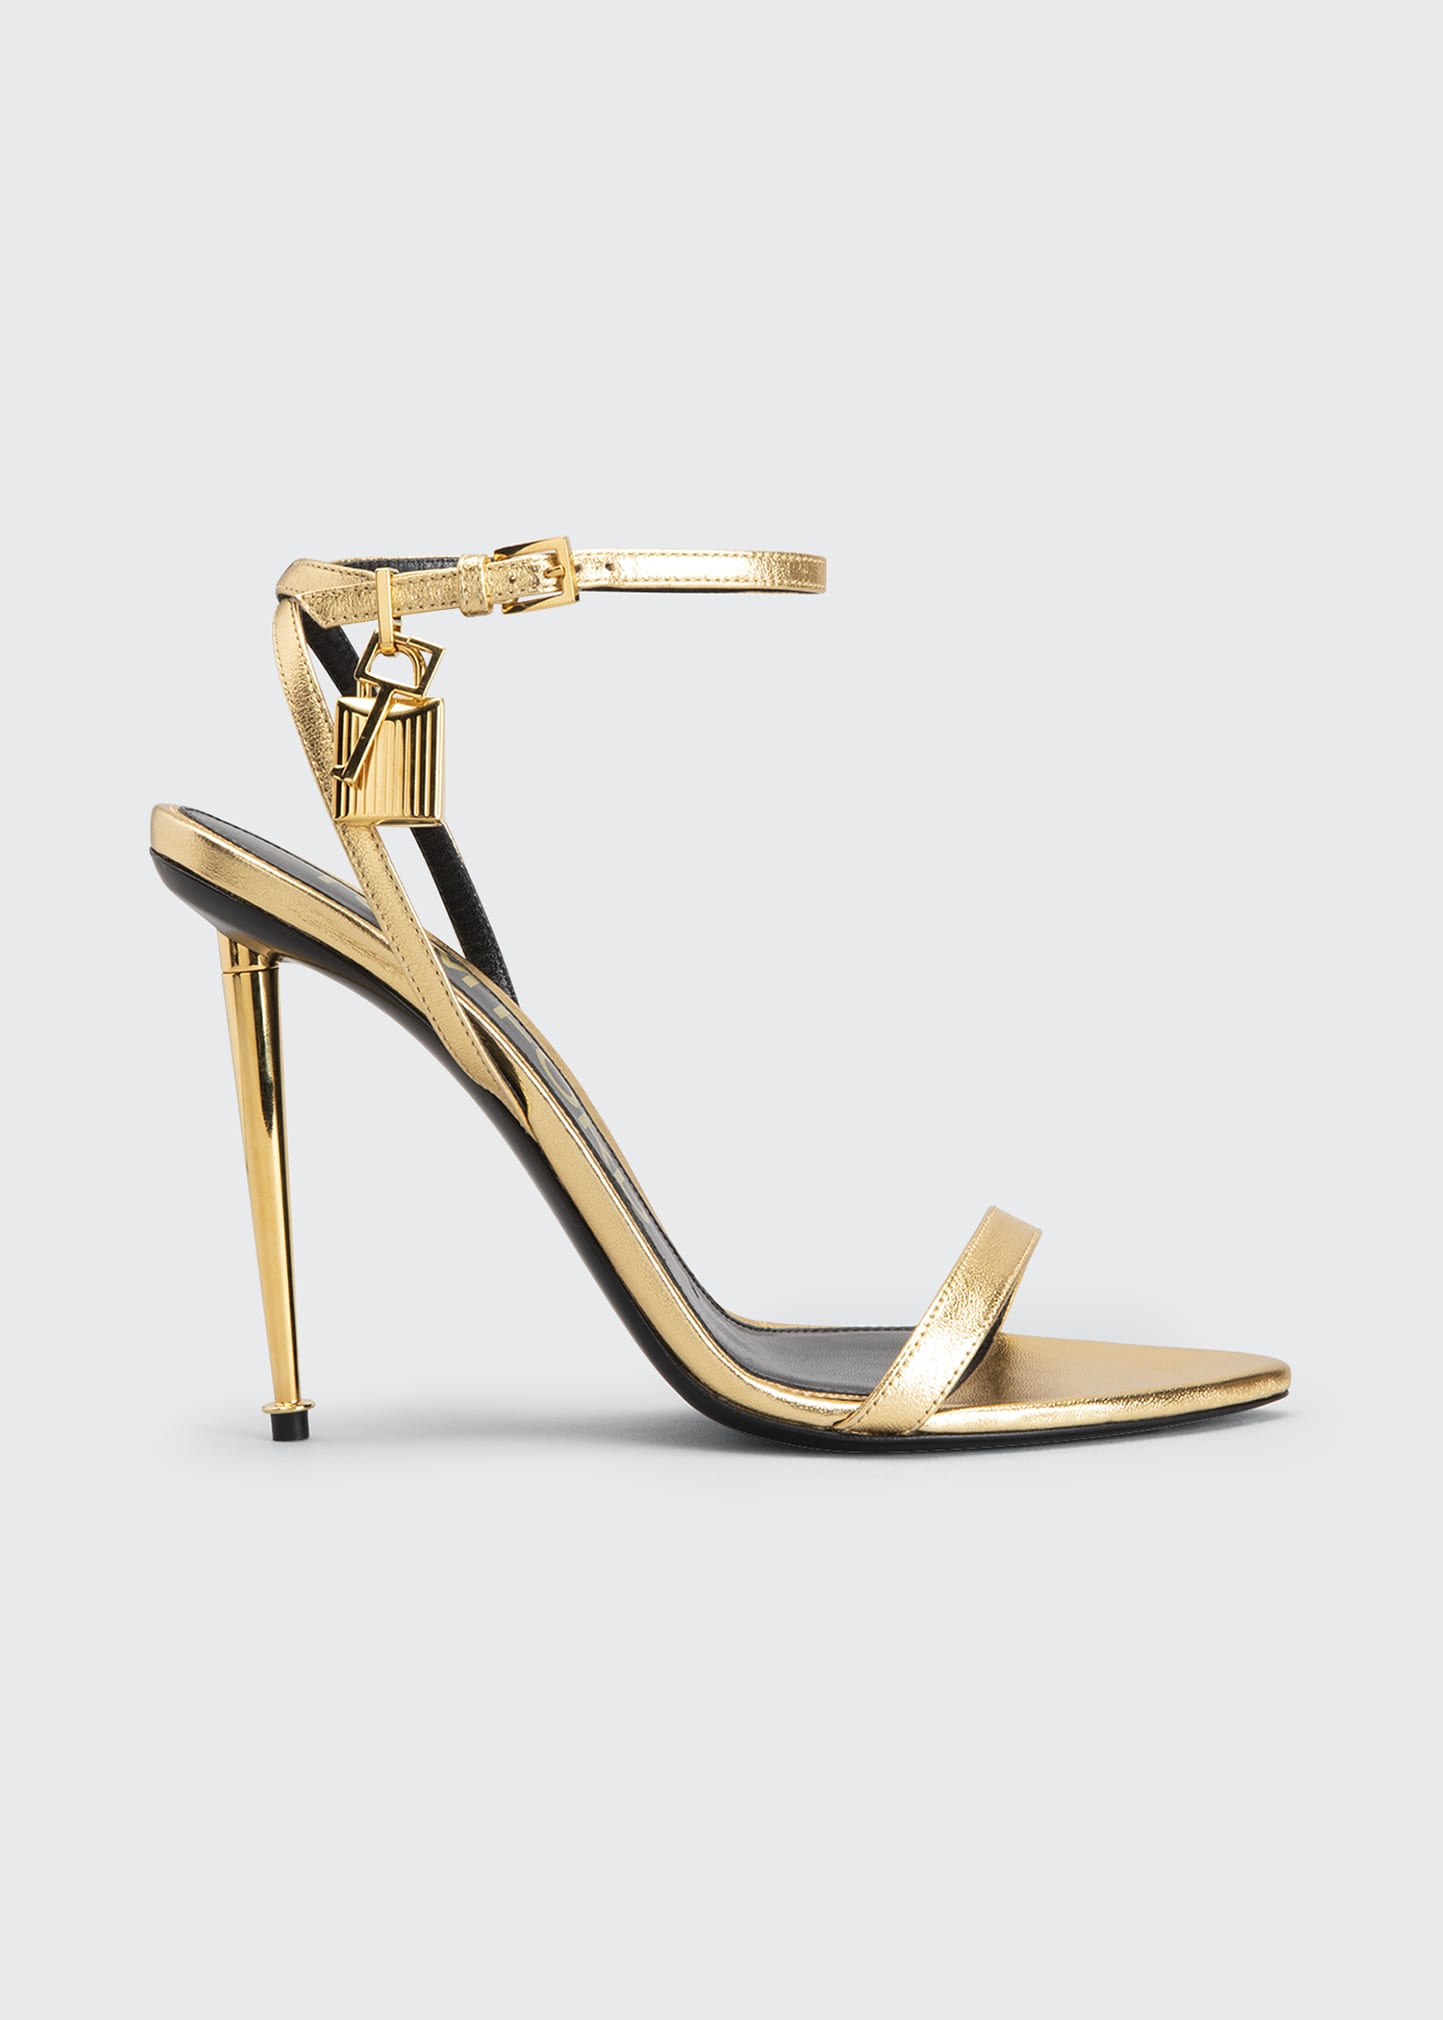 Manolo Blahnik Aoki Gold 105mm Sandals - Bergdorf Goodman